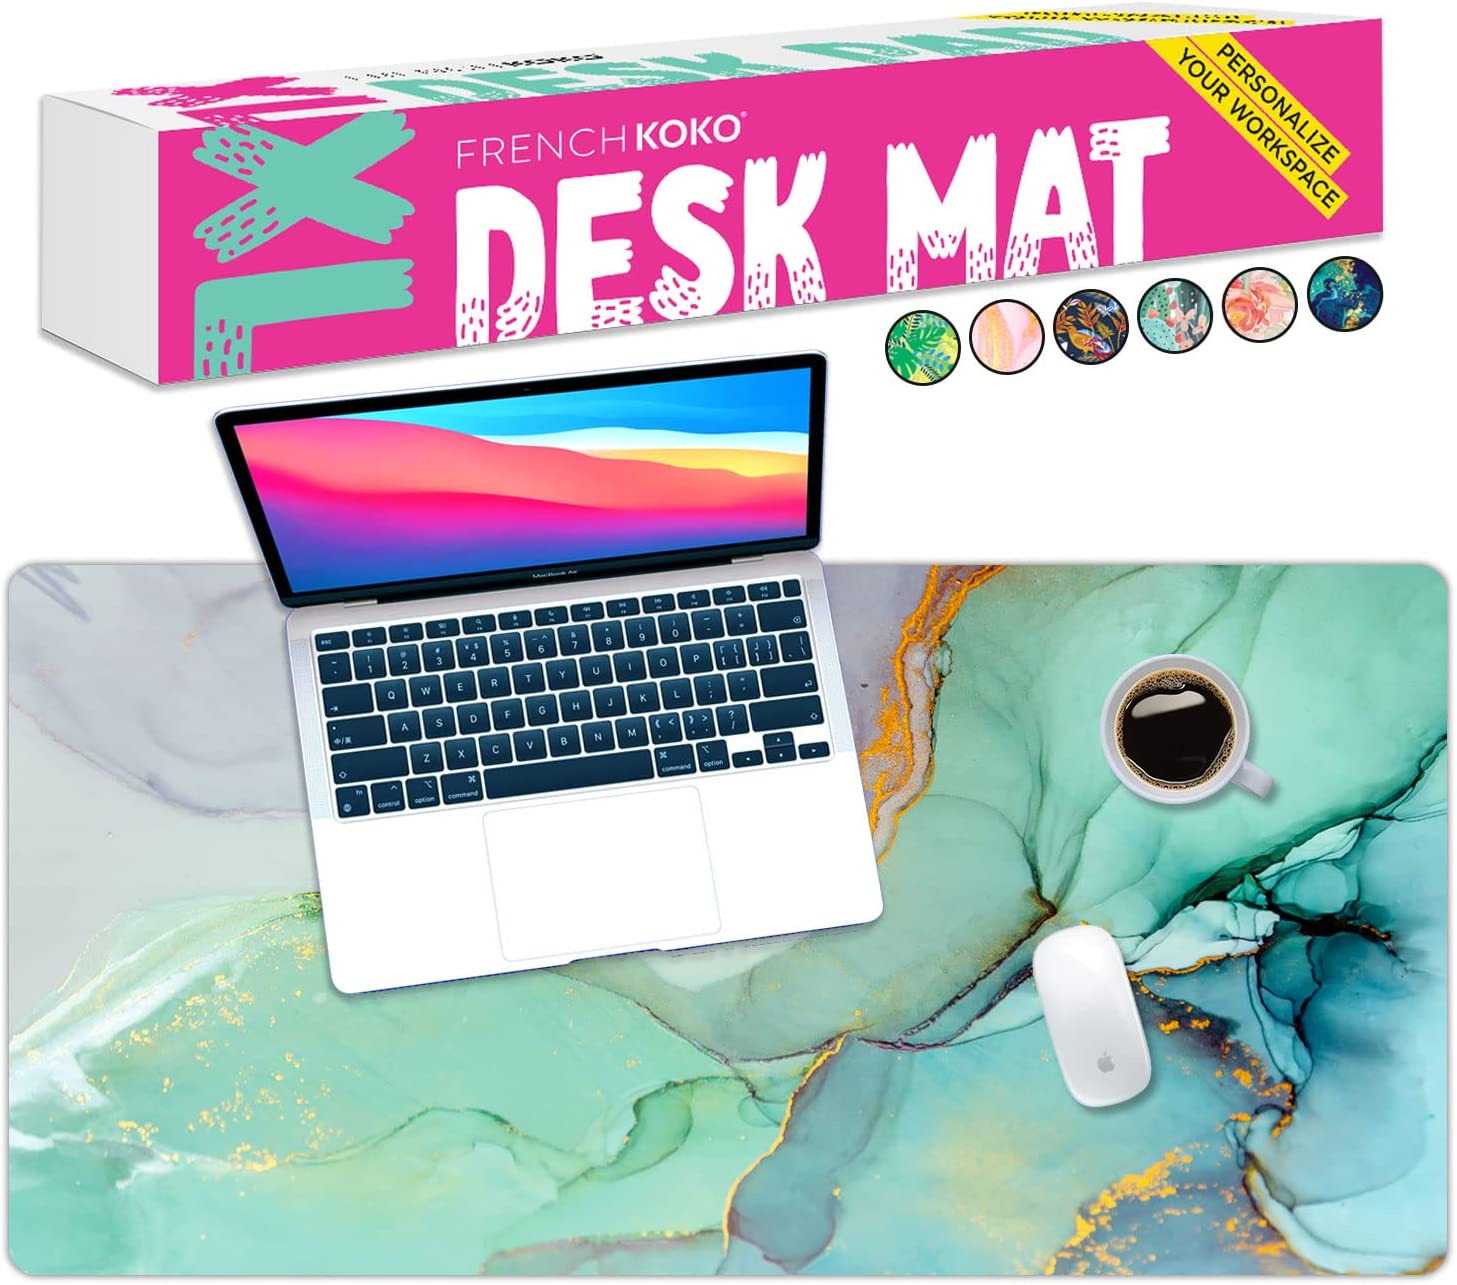 French Koko Large Mouse Pad, Long Desk Mat Keyboard Pad Desktop Accessories Home